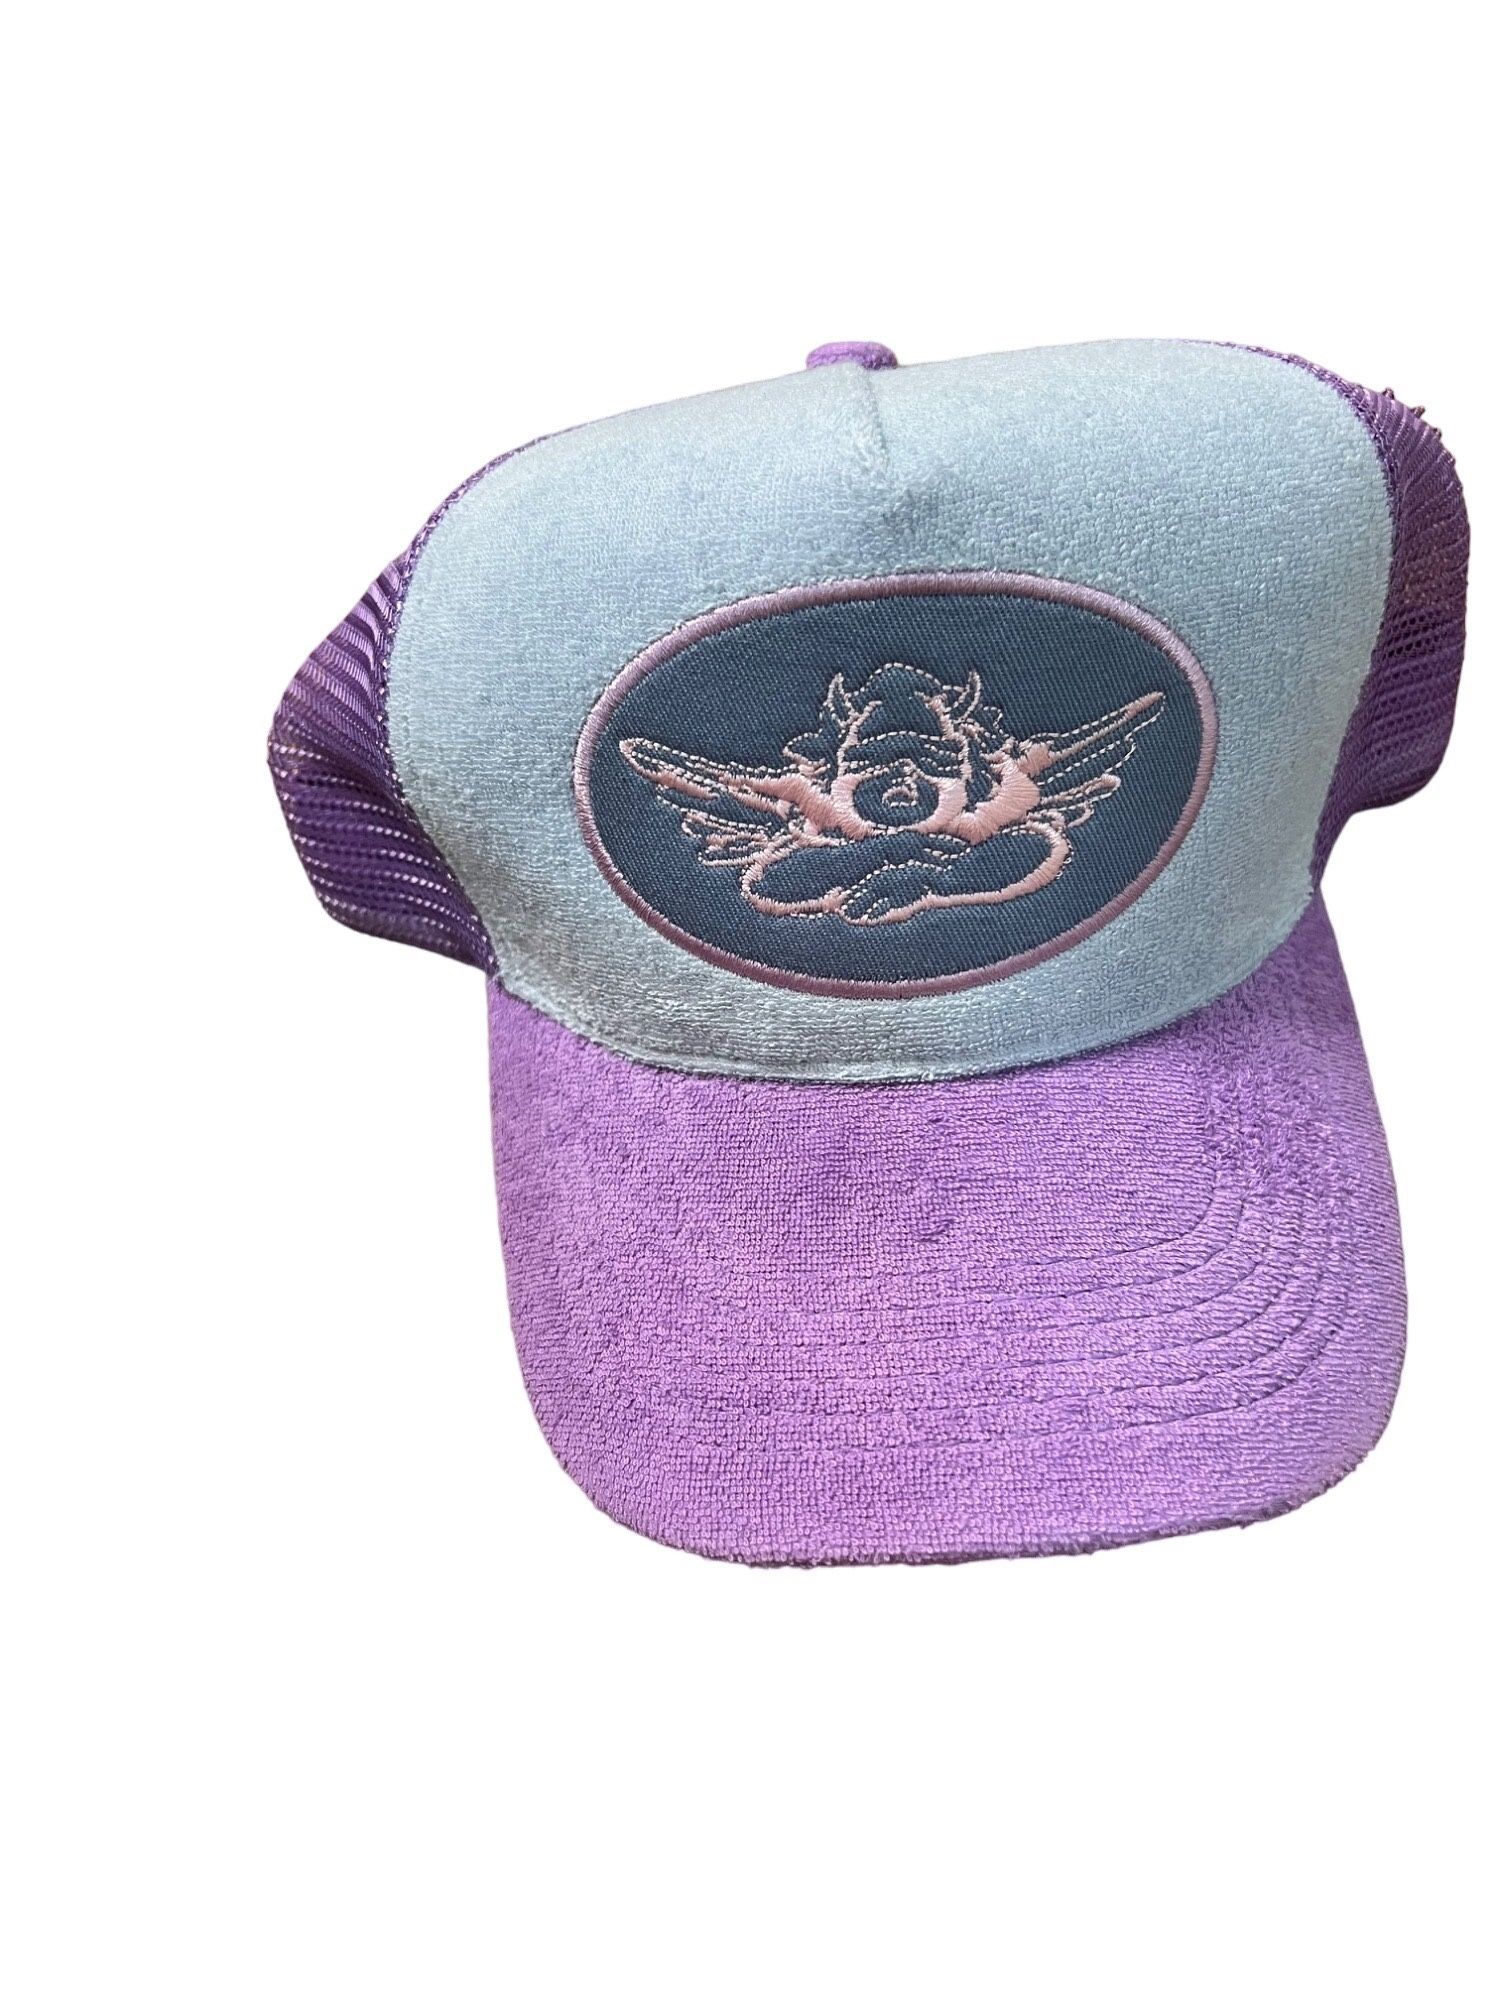 Boys Lie Purple Trucker Hat Terry Cloth Mesh Back Pink Purple White Snapback